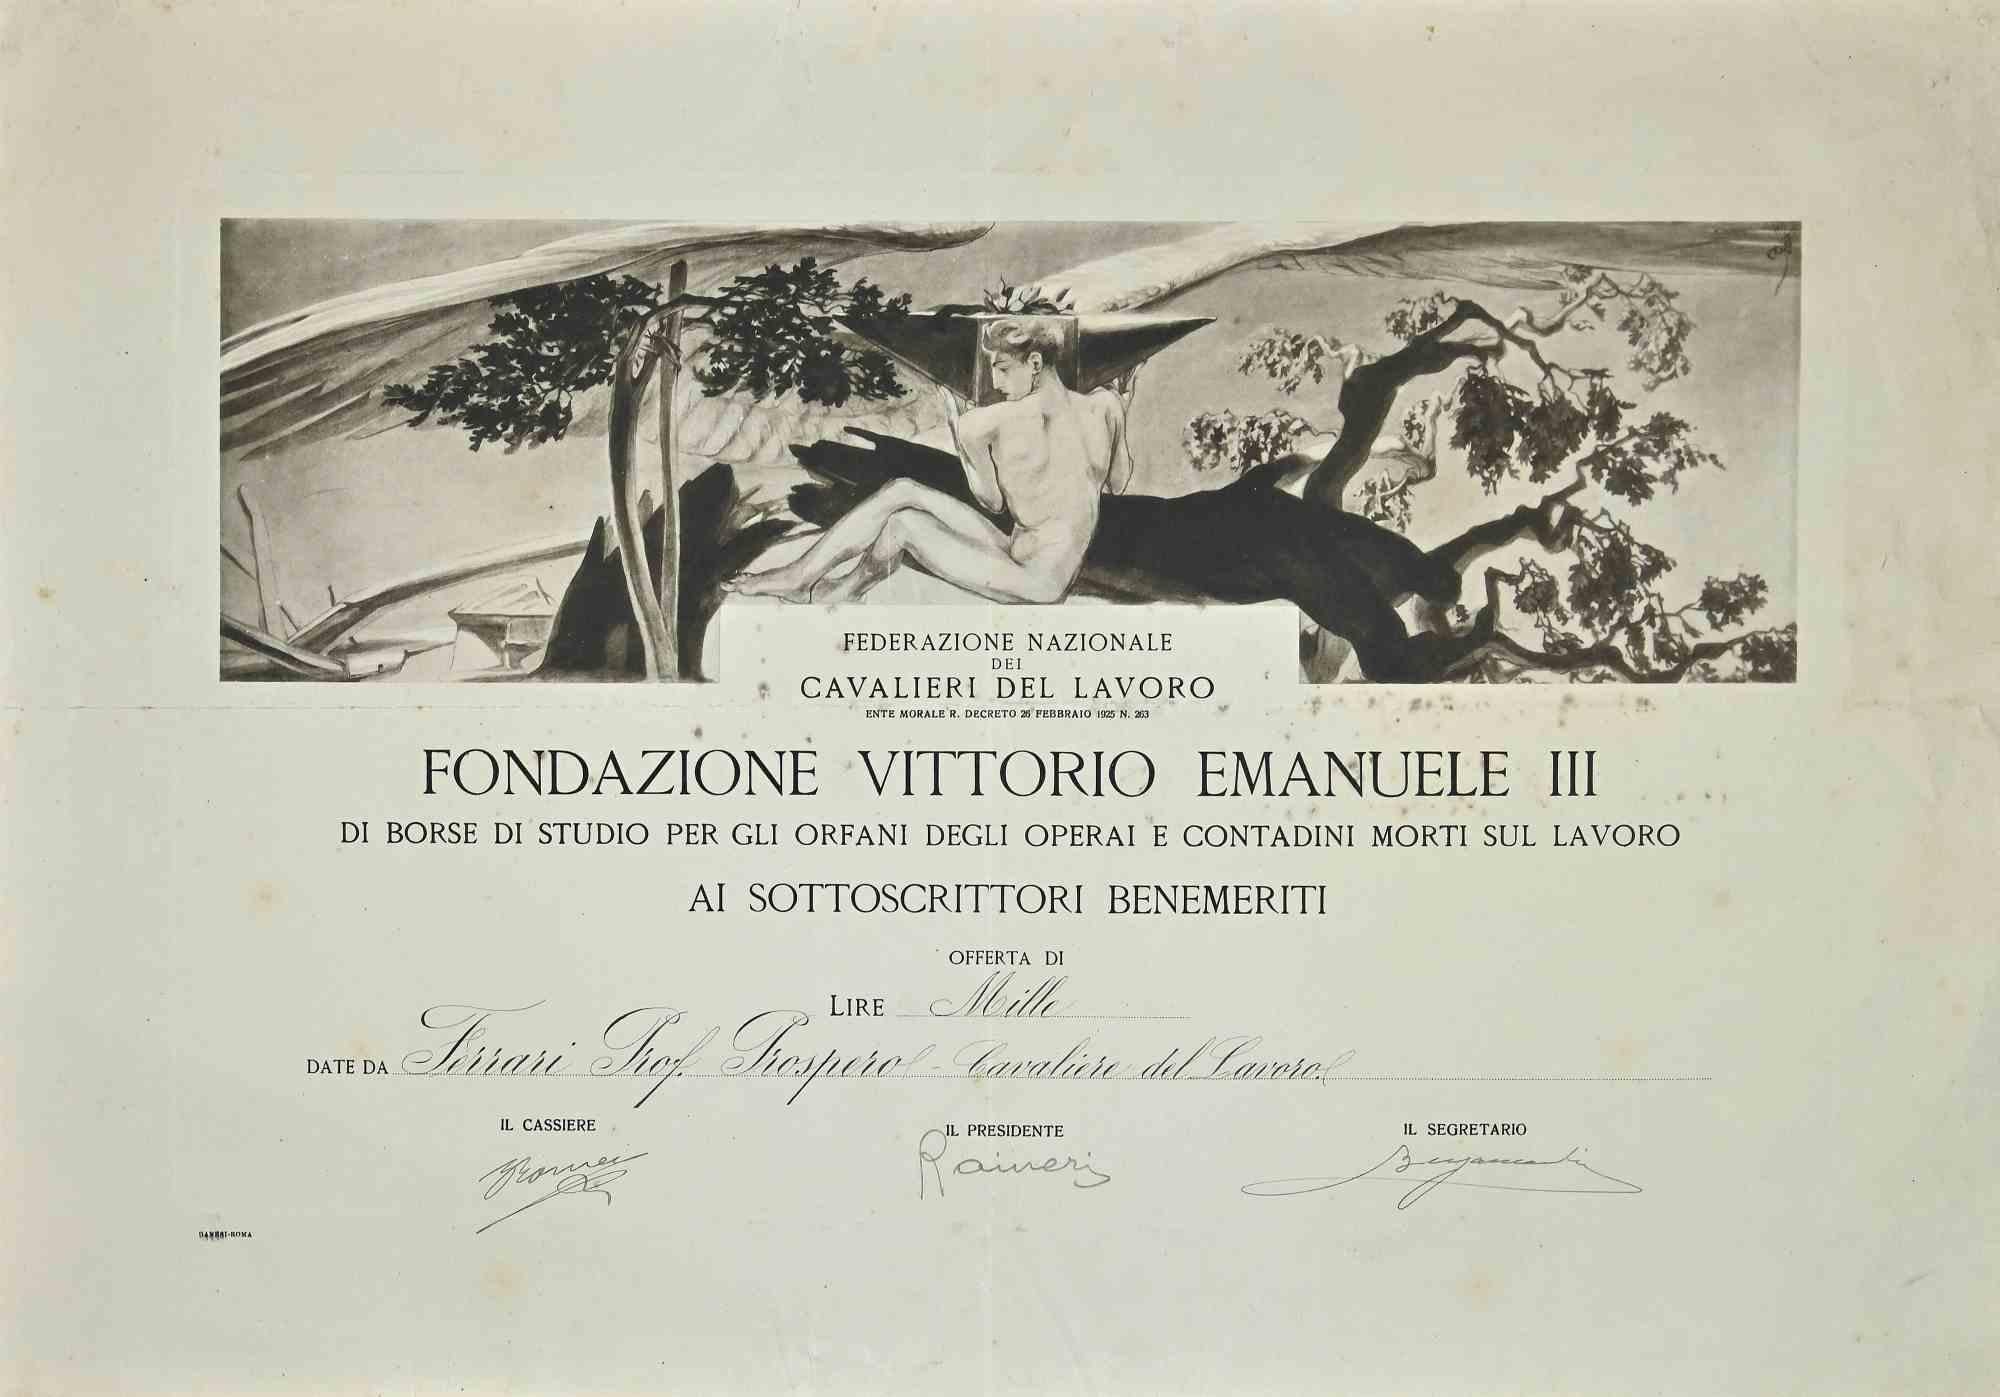 Certificate of the Vittorio Emanuele III Foundation - Original Etching - 1920s